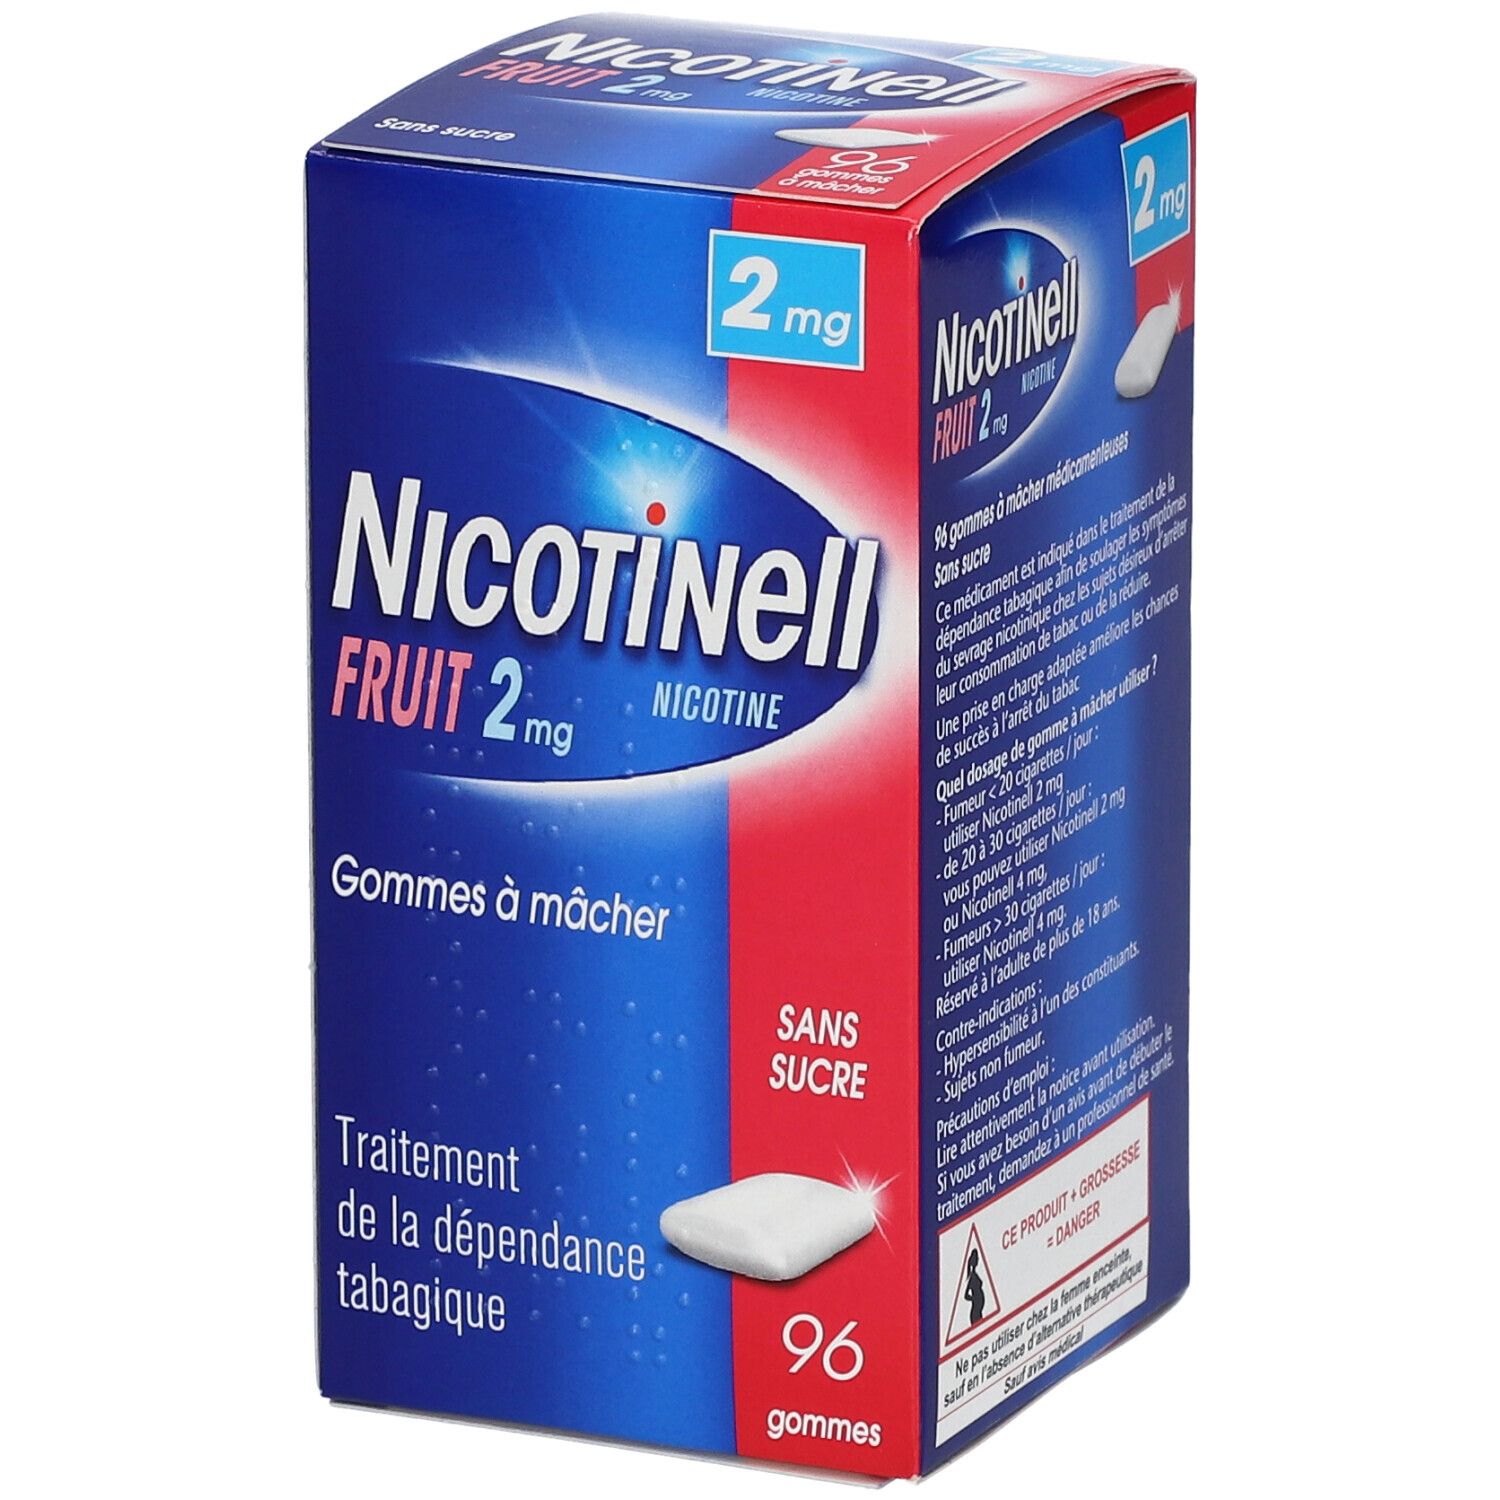 Nicotinell® Fruit s/s 2 mg